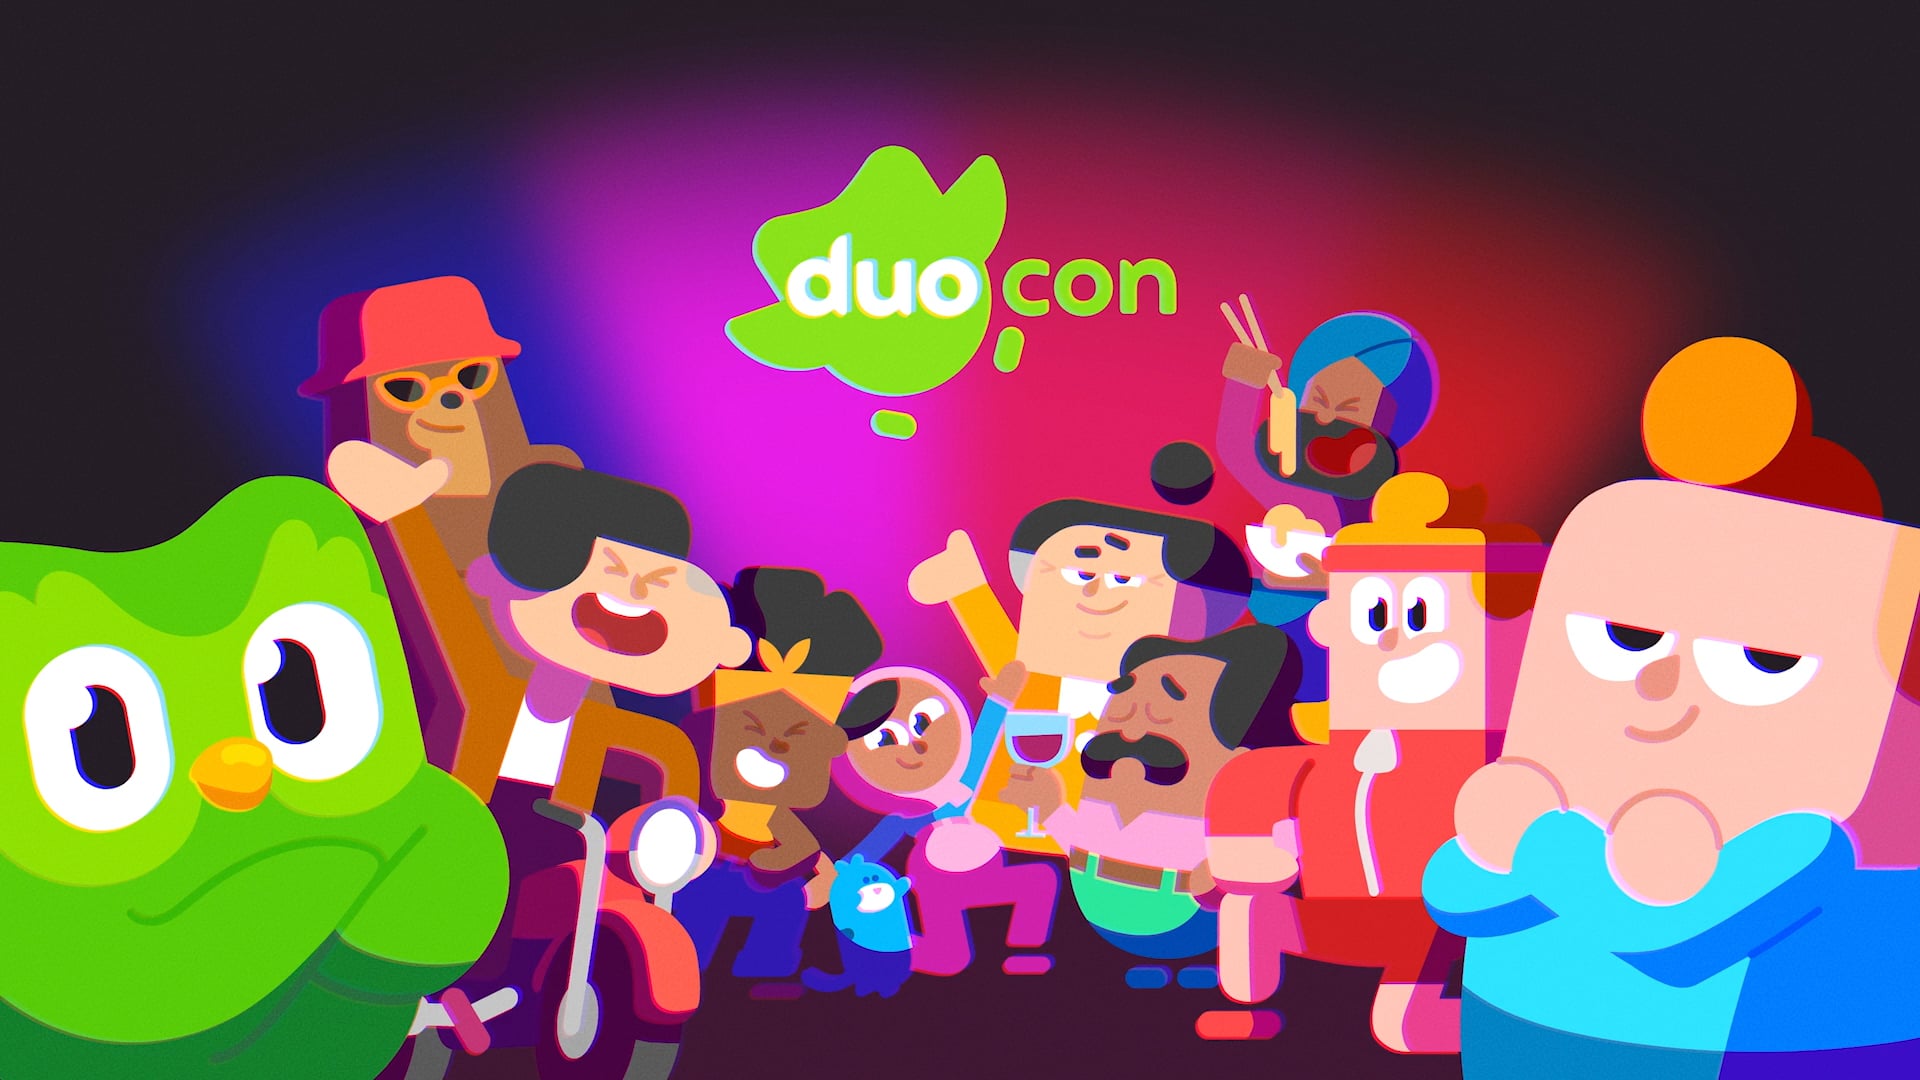 Duolingo's Duocon 2022 Full Show